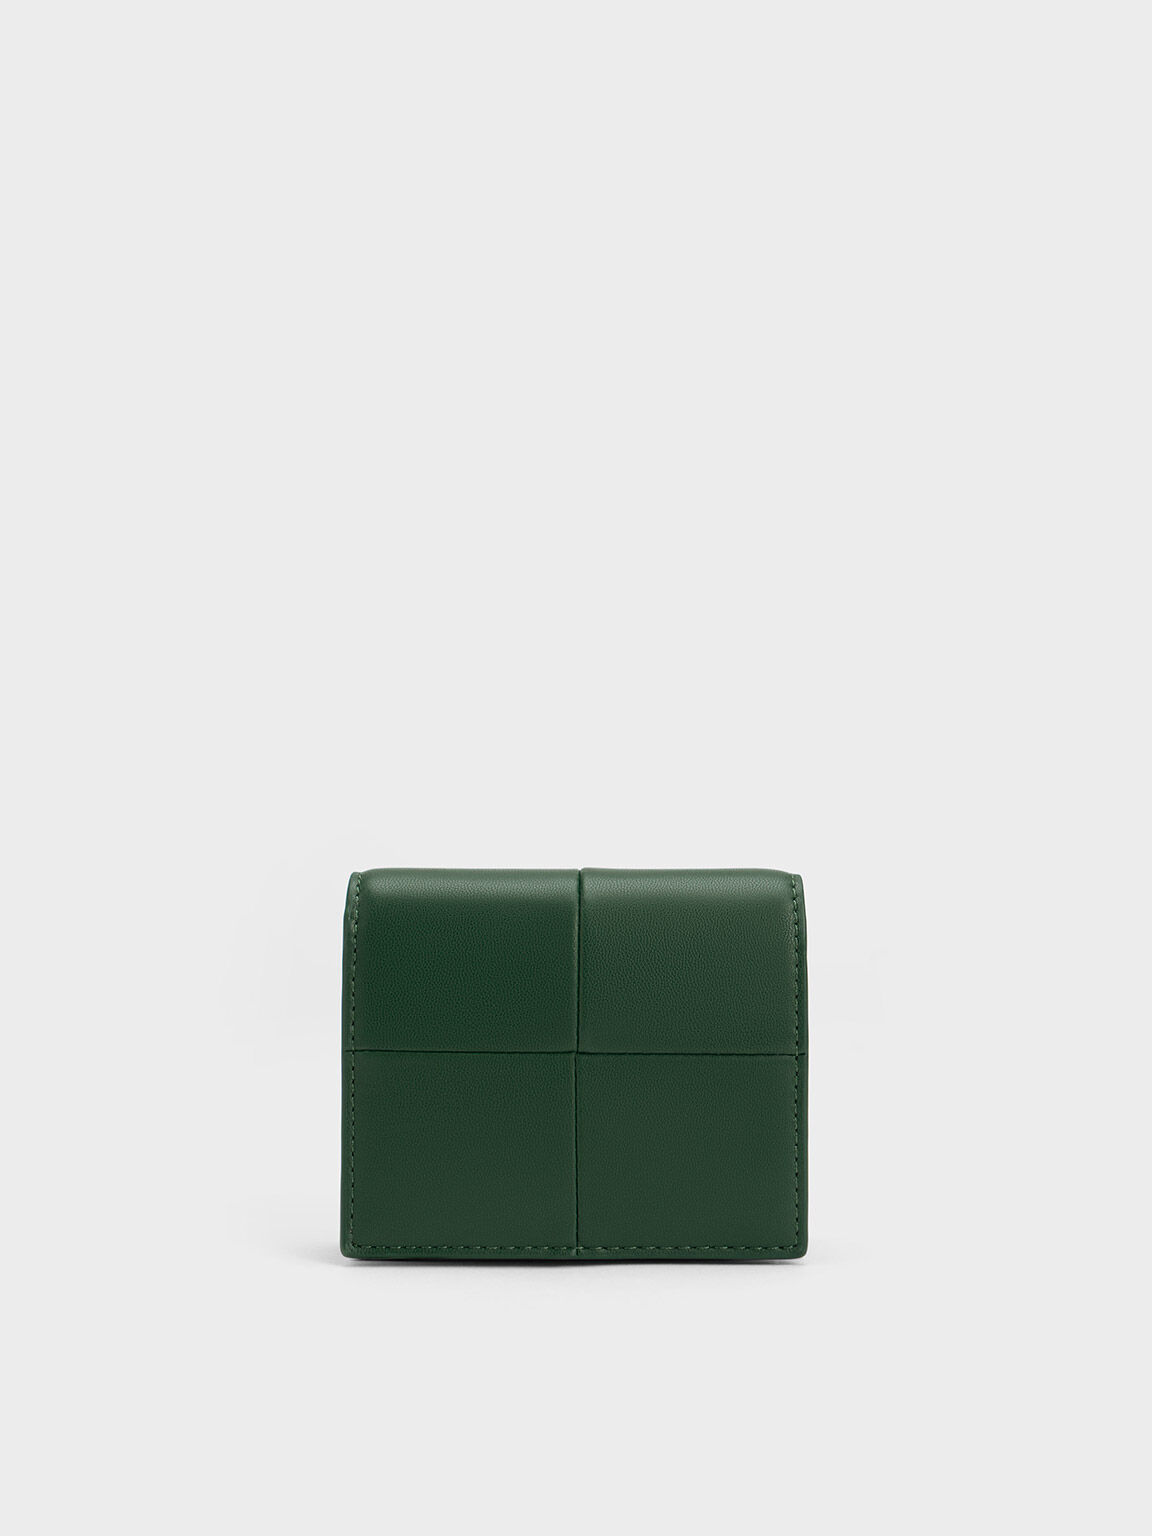 Georgette Small Wallet, Dark Green, hi-res